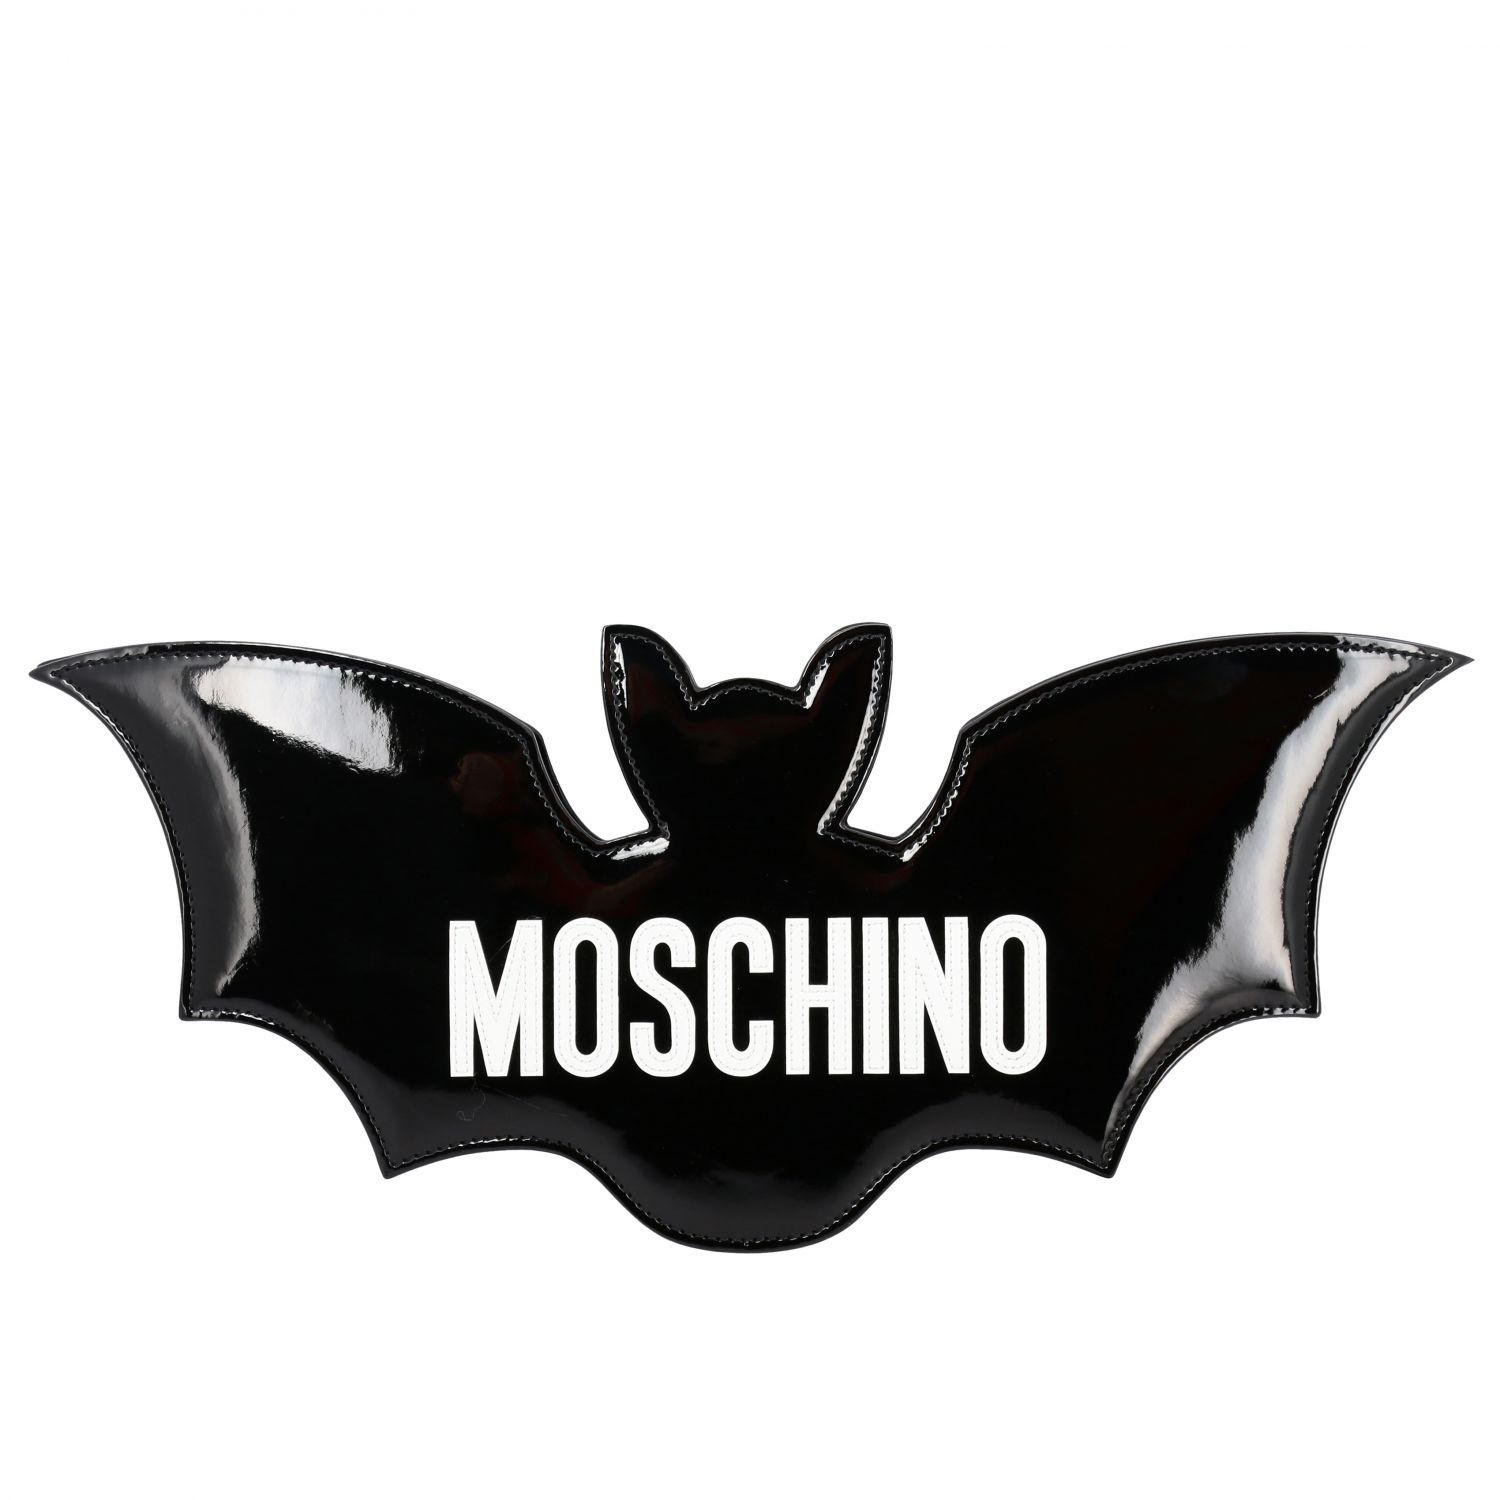 moschino emblem